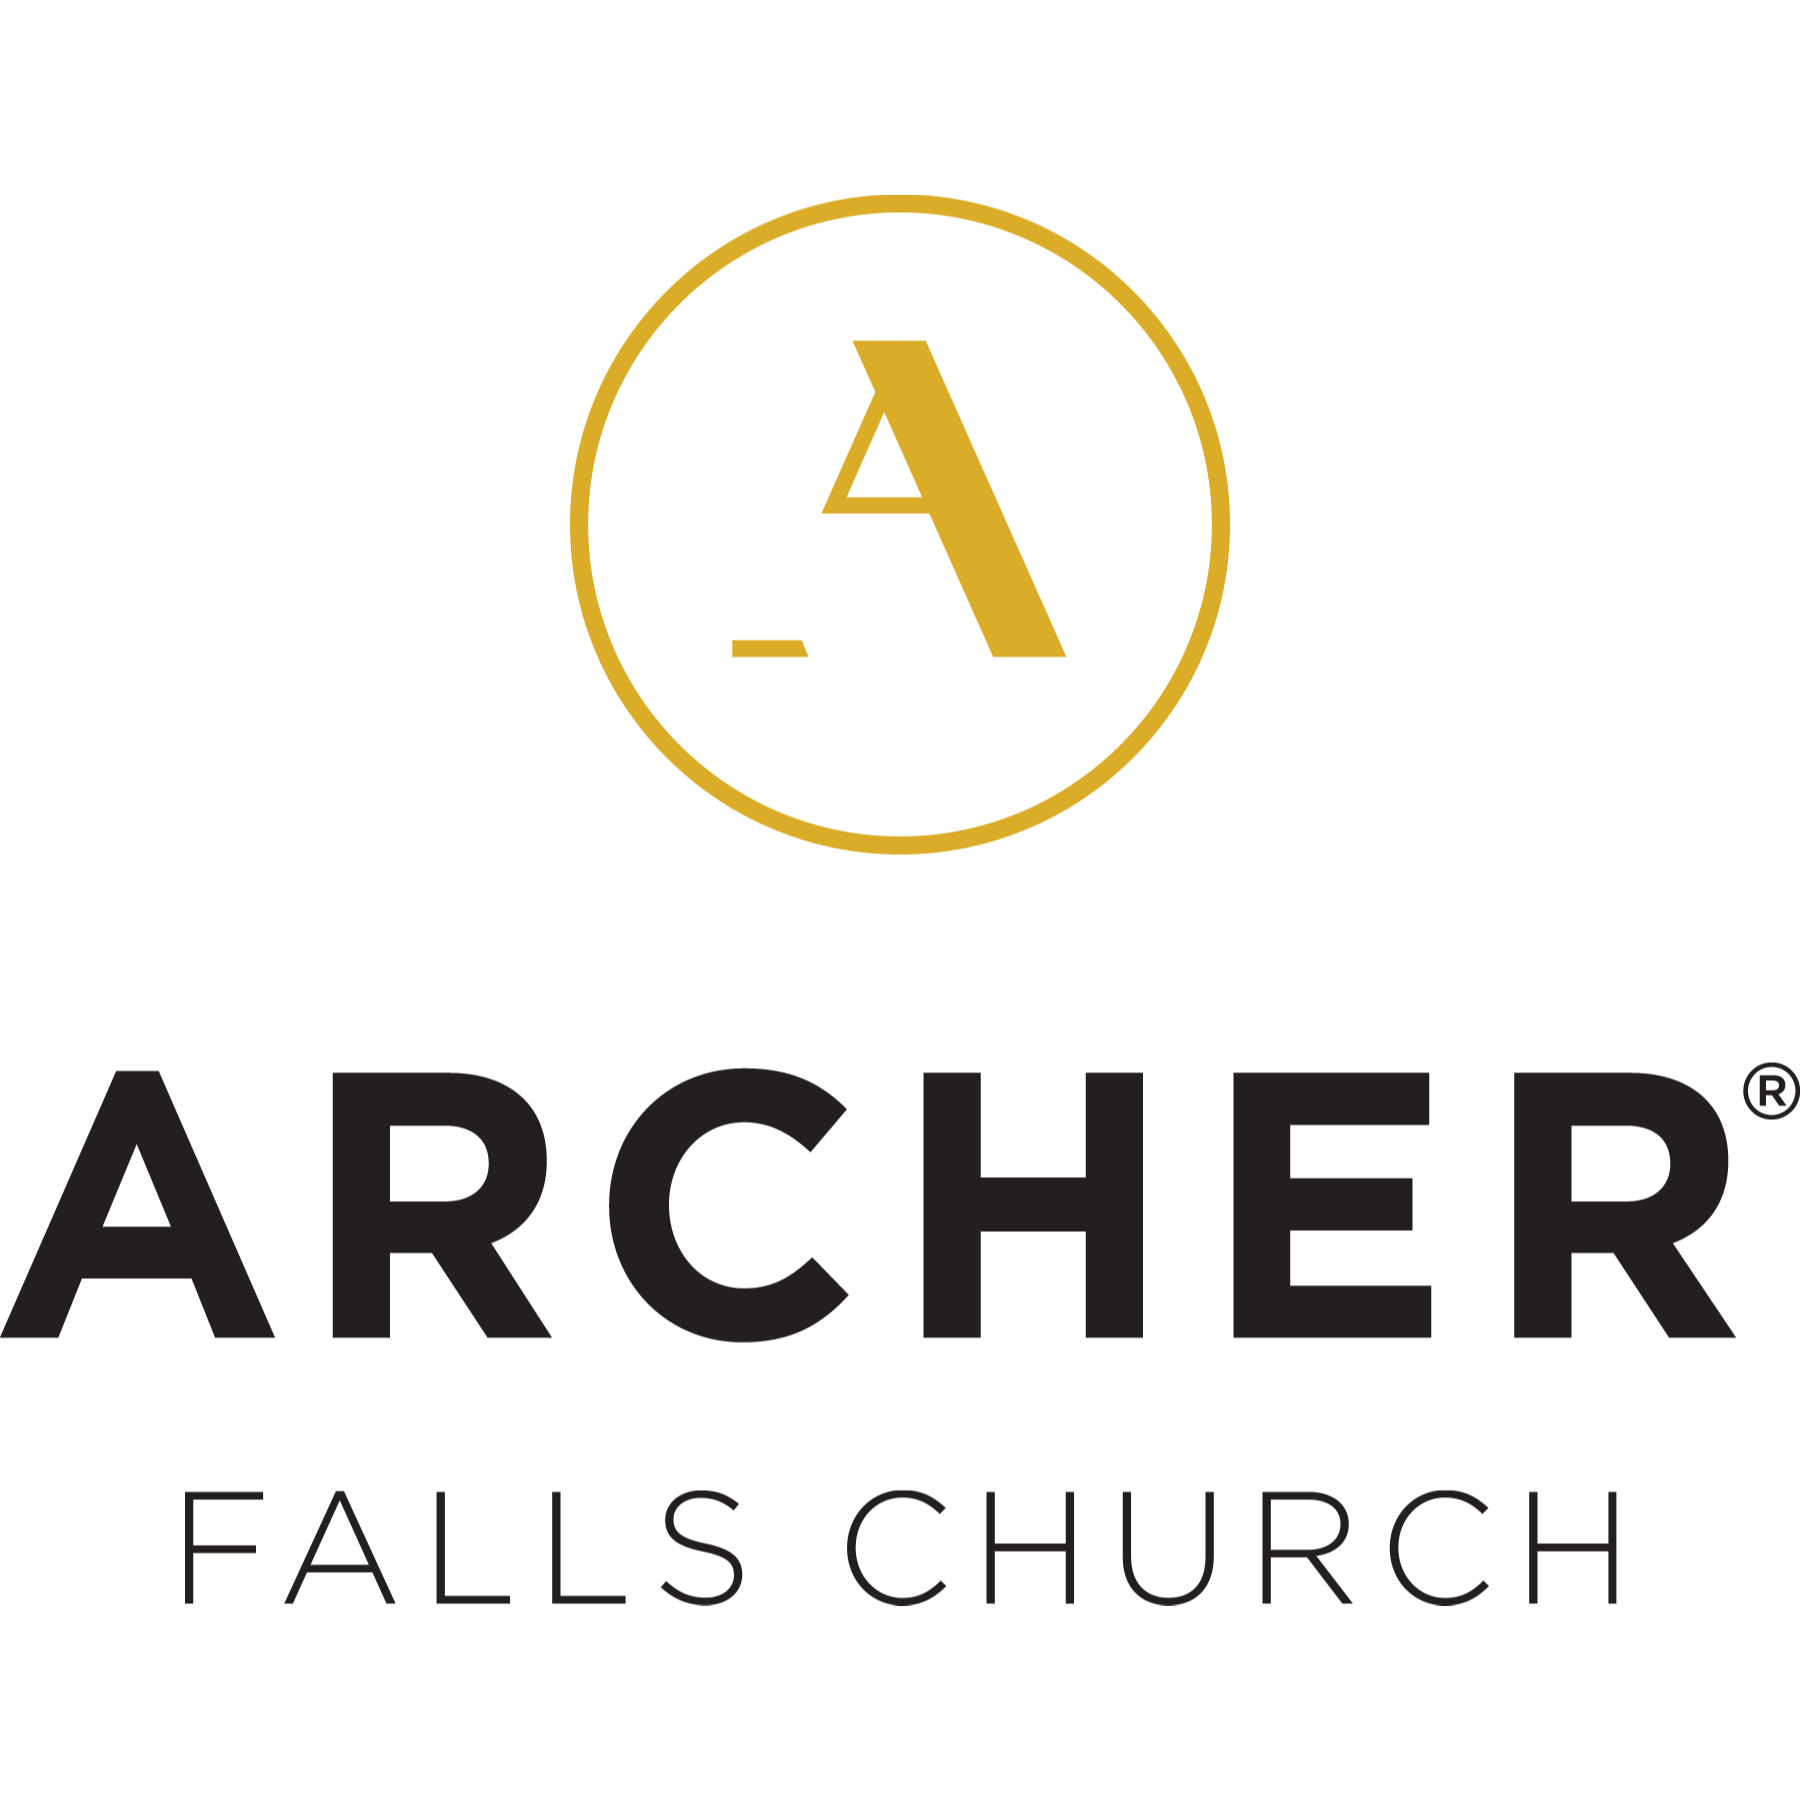 Archer Hotel Falls Church - Fairfax, VA 22031 - (571)327-2277 | ShowMeLocal.com